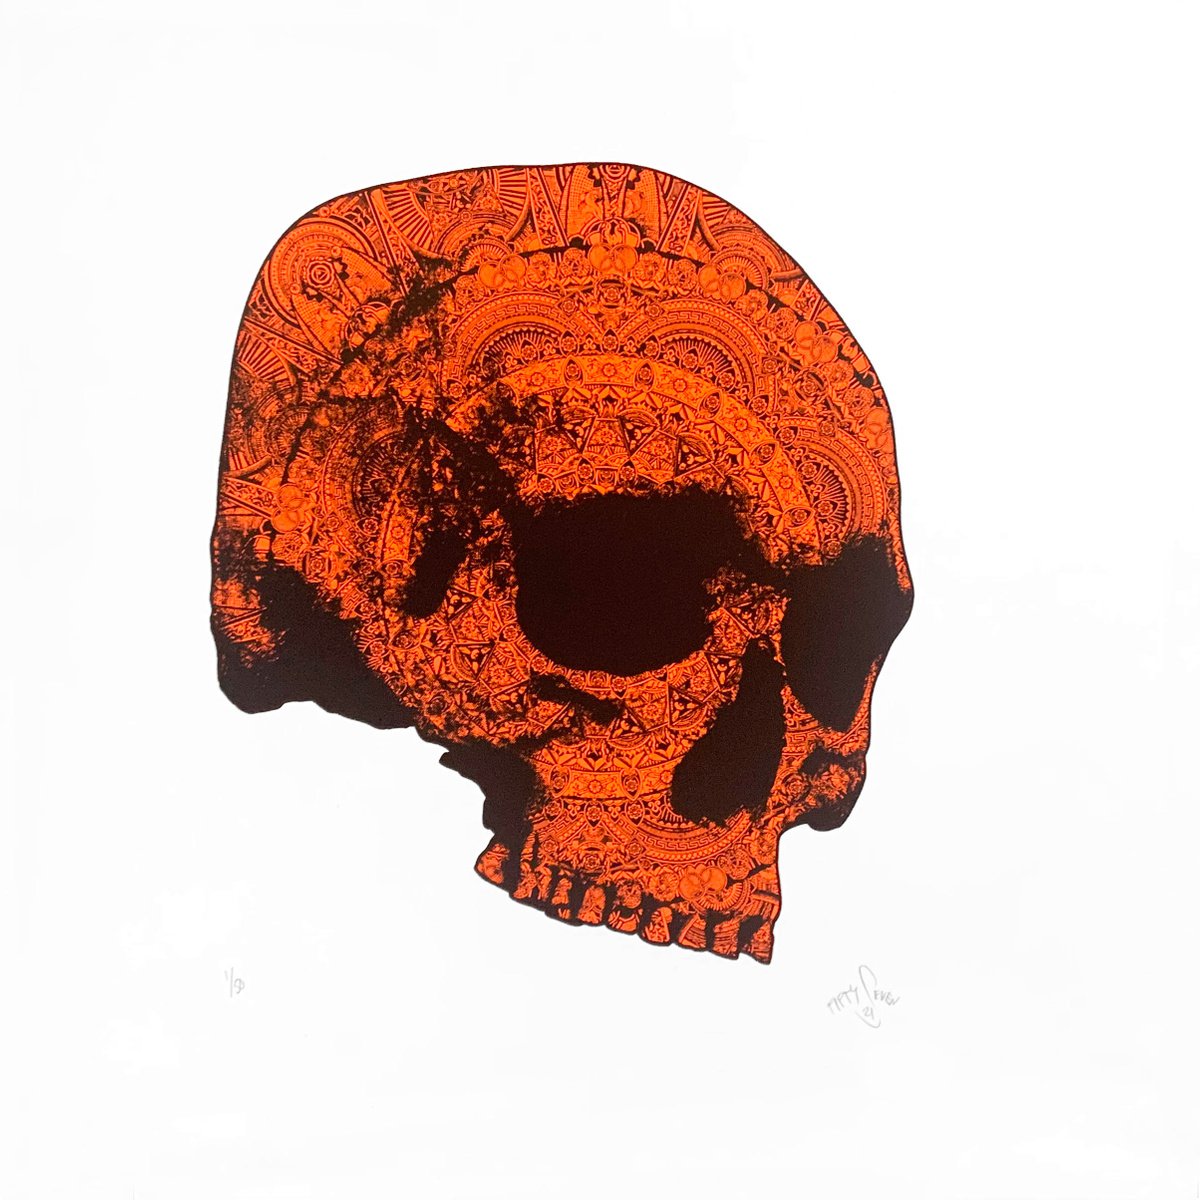 Neon Orange Skull by 57Design